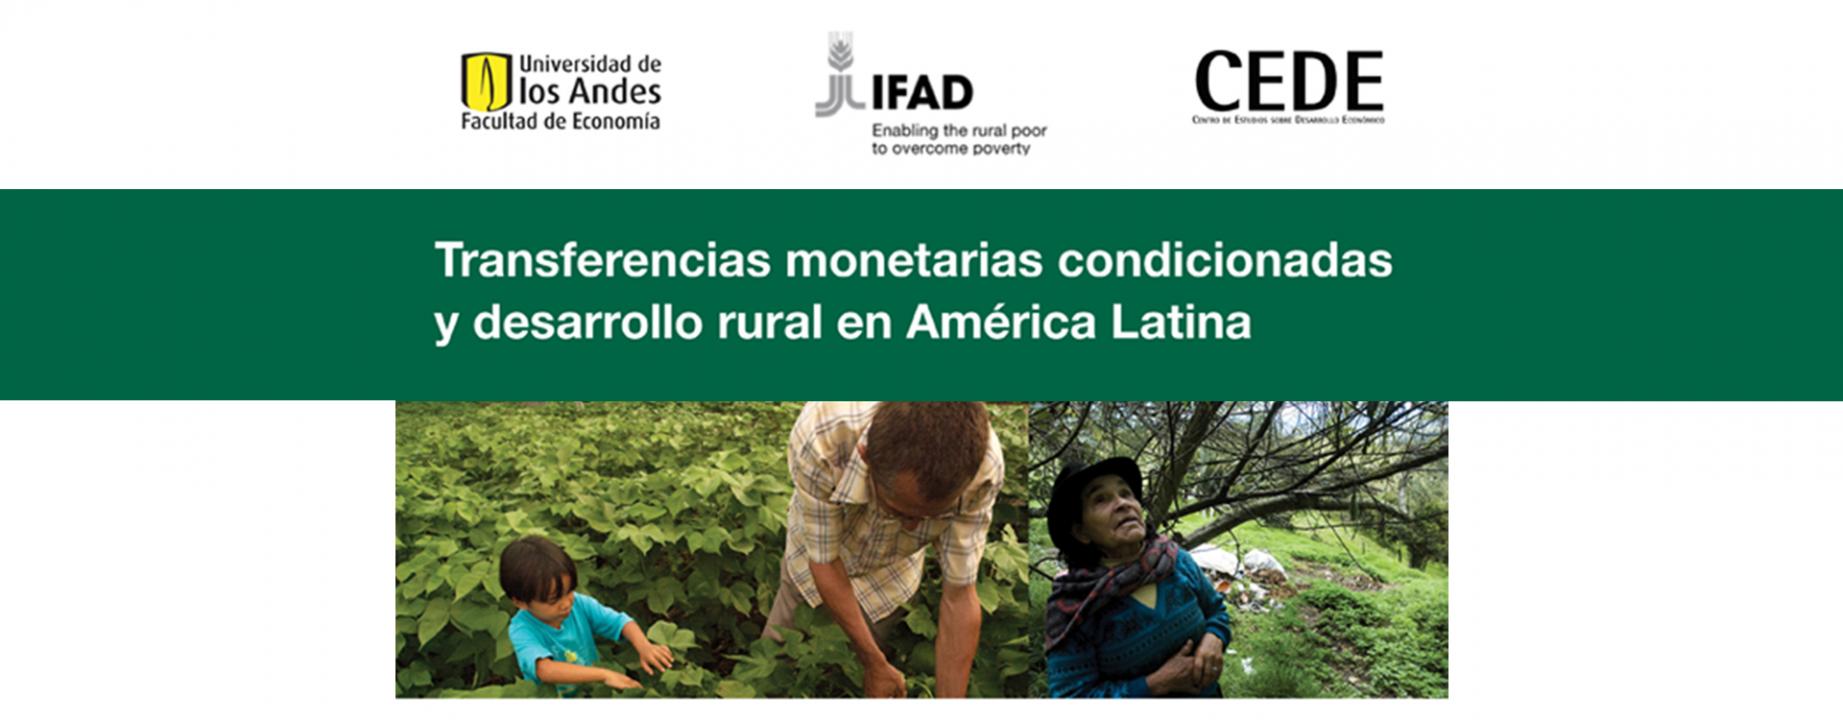 desarrollo rural, américa latina, transferencias monetarias condicionadas